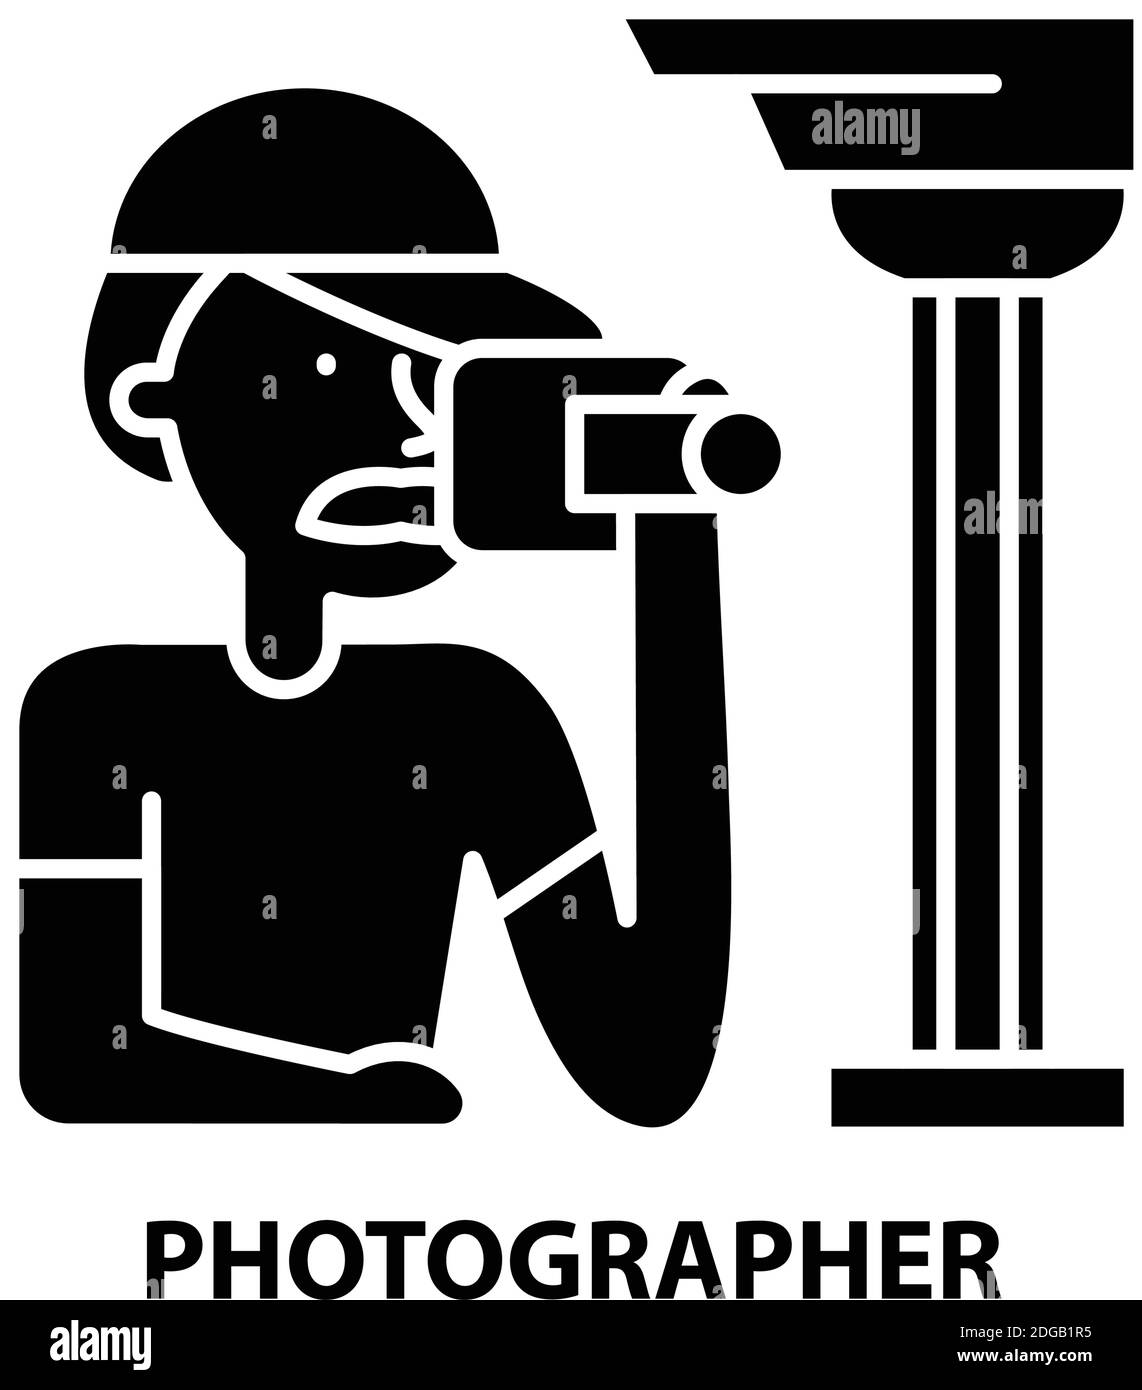 photographer icon, black vector sign with editable strokes, concept illustration Stock Vector